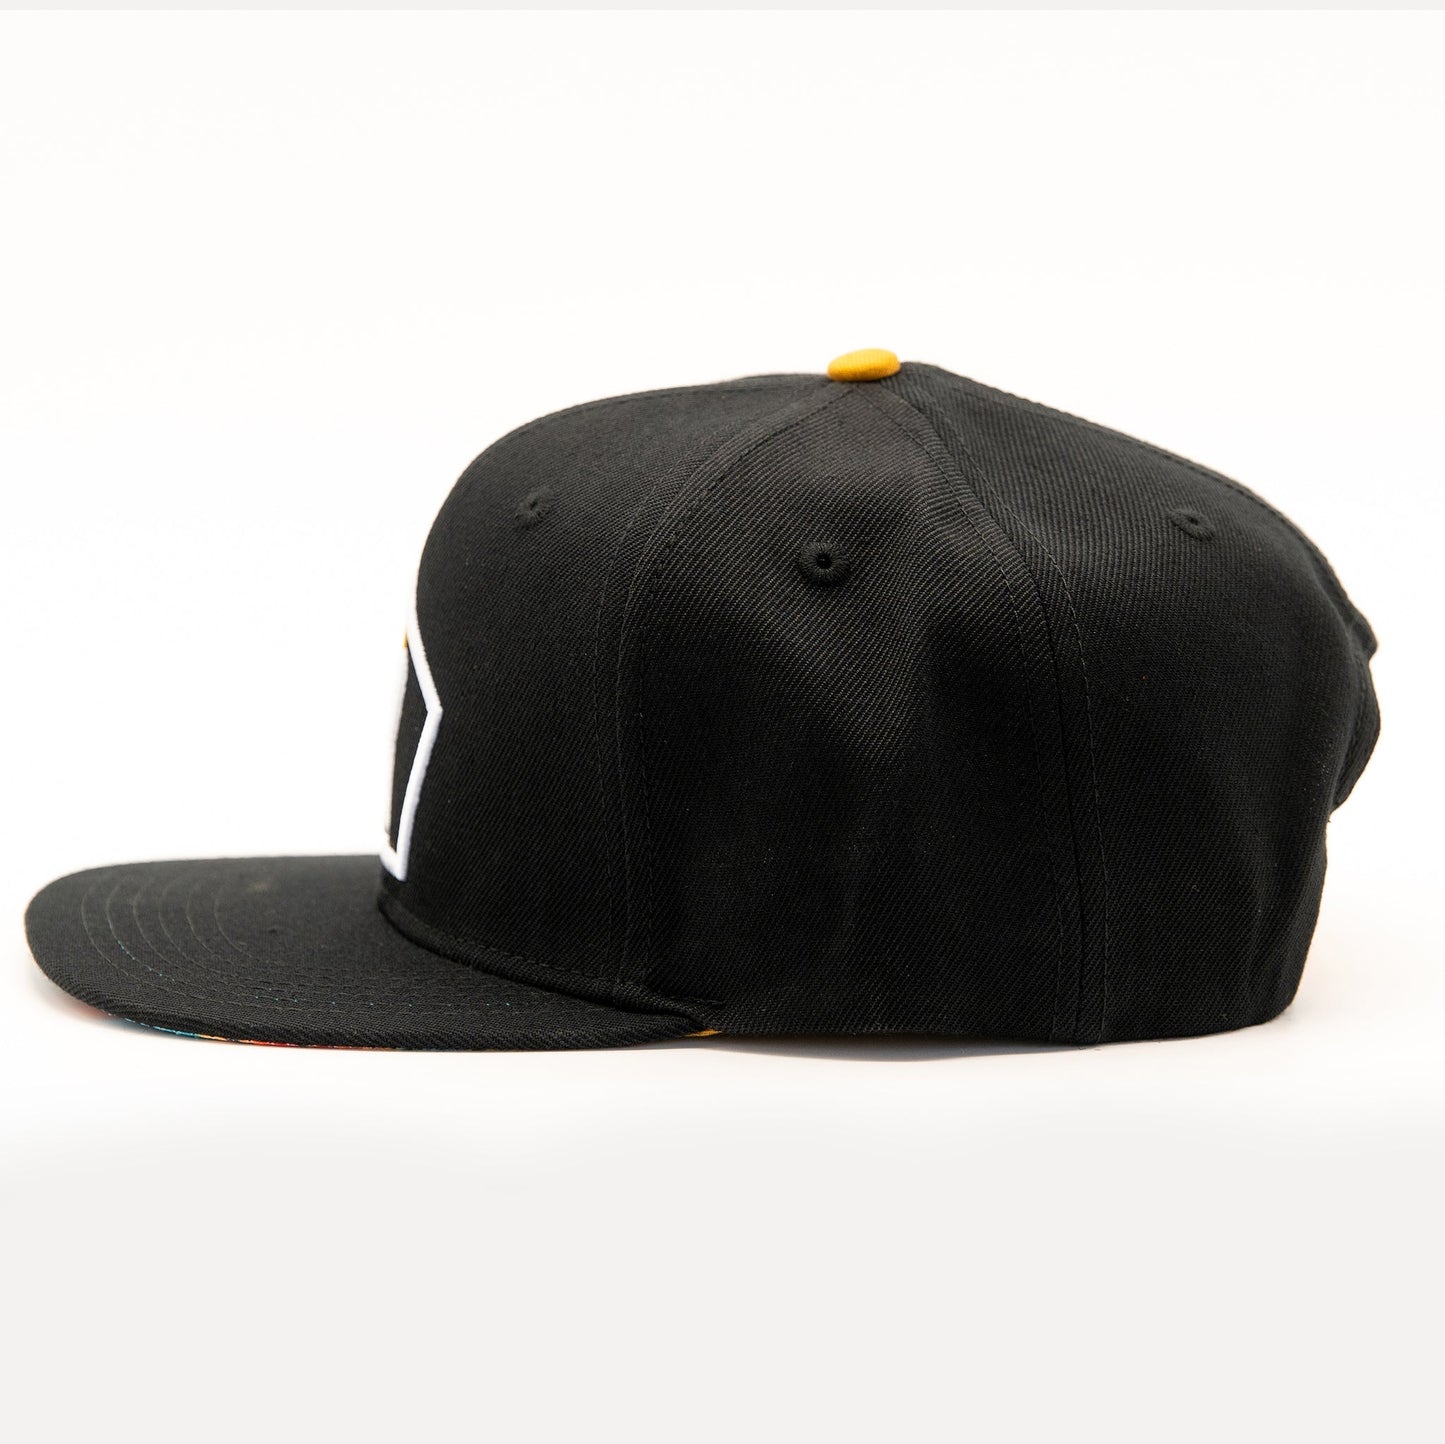 Deez Hats Plus-One-Pentagon Snapback Cap Flat Brim Deez-Hats